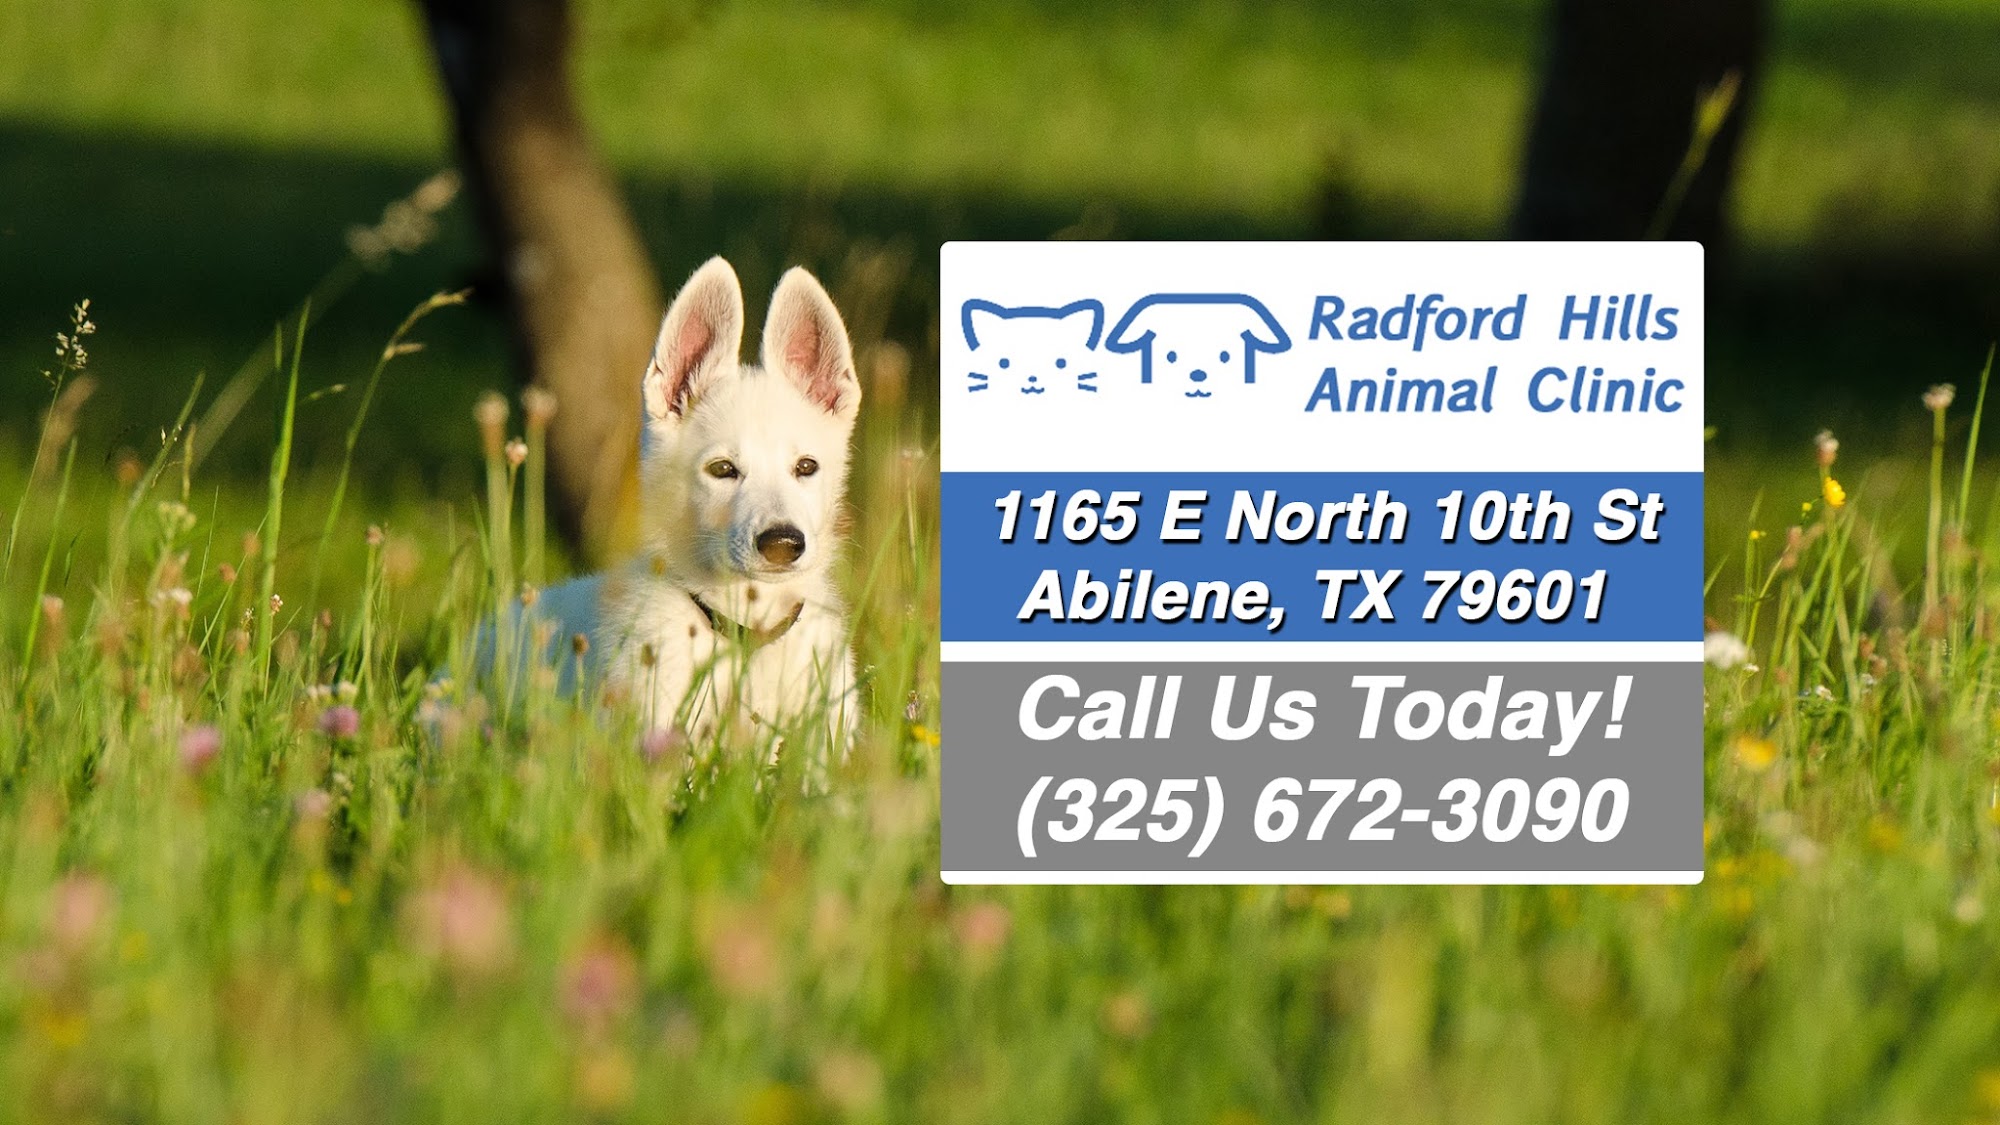 Radford Hills Animal Clinic